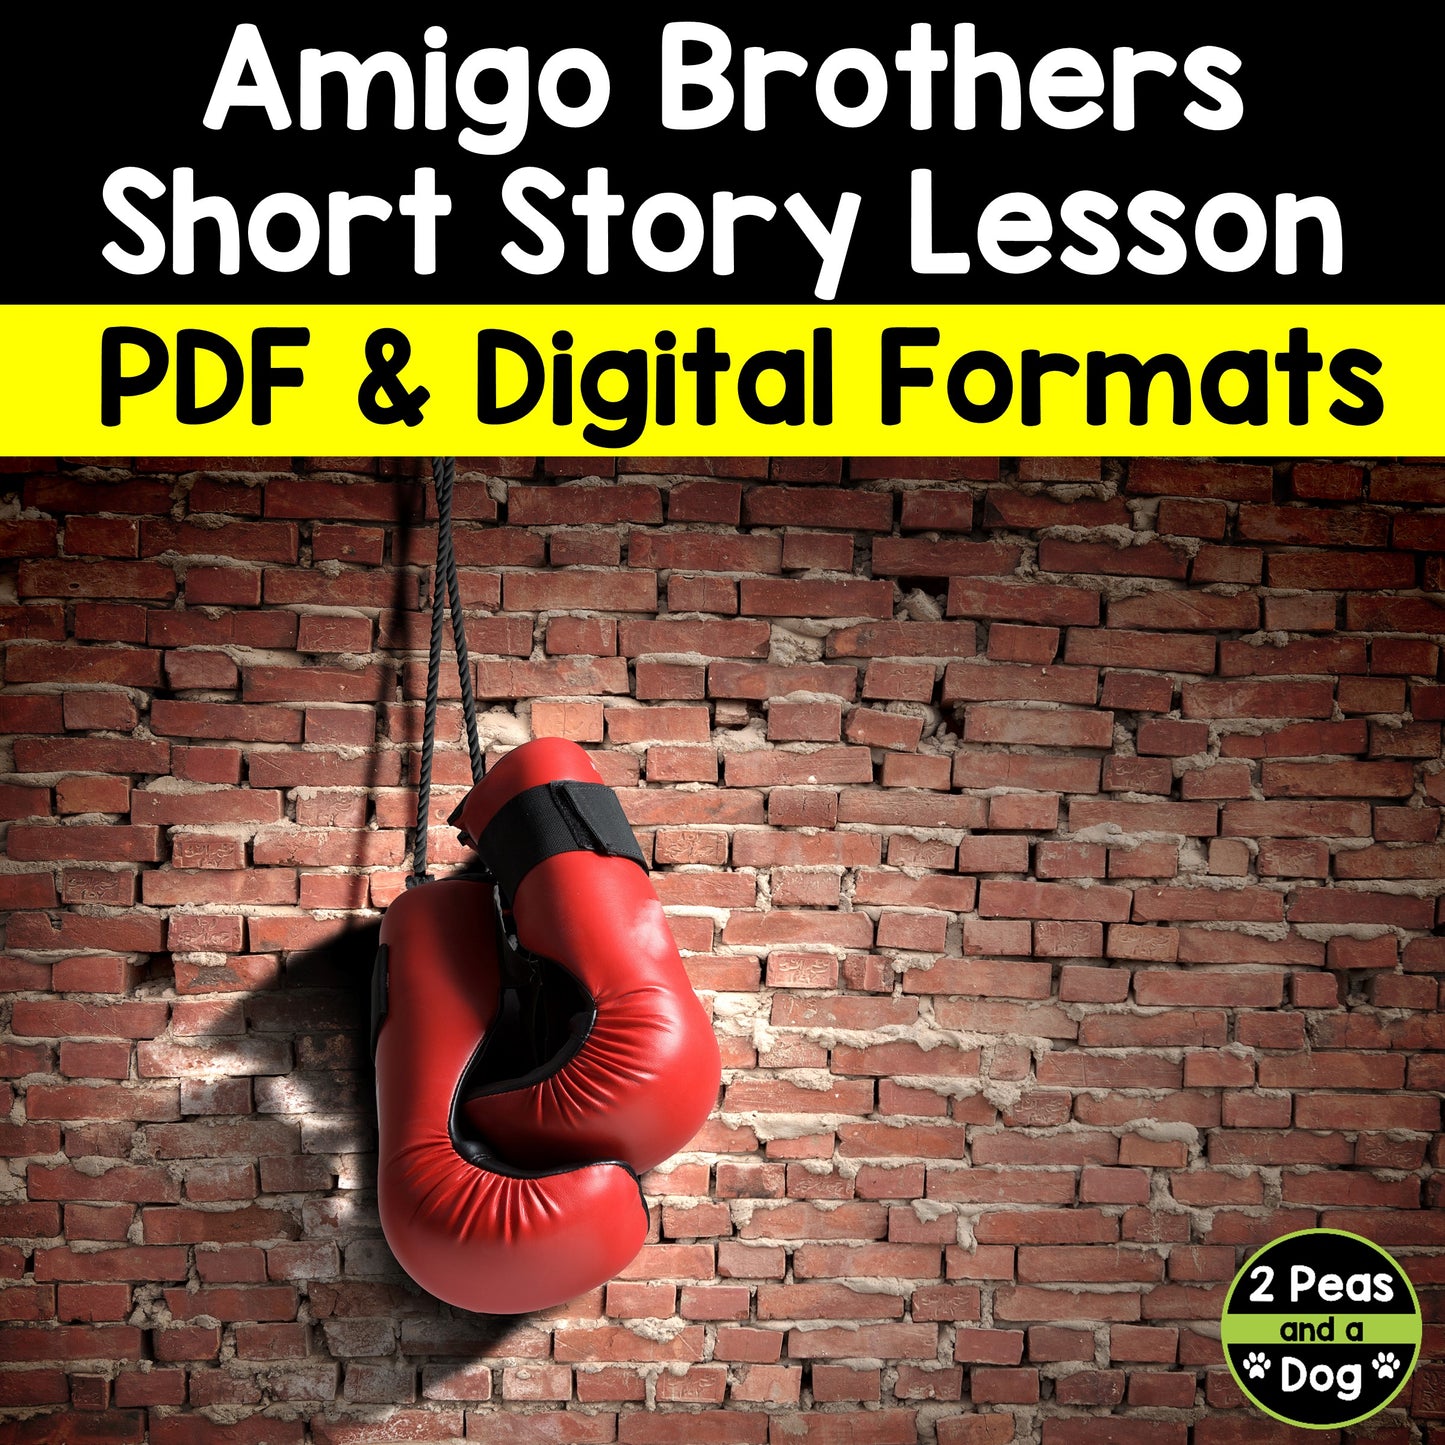 Amigo Brothers Short Story Lesson